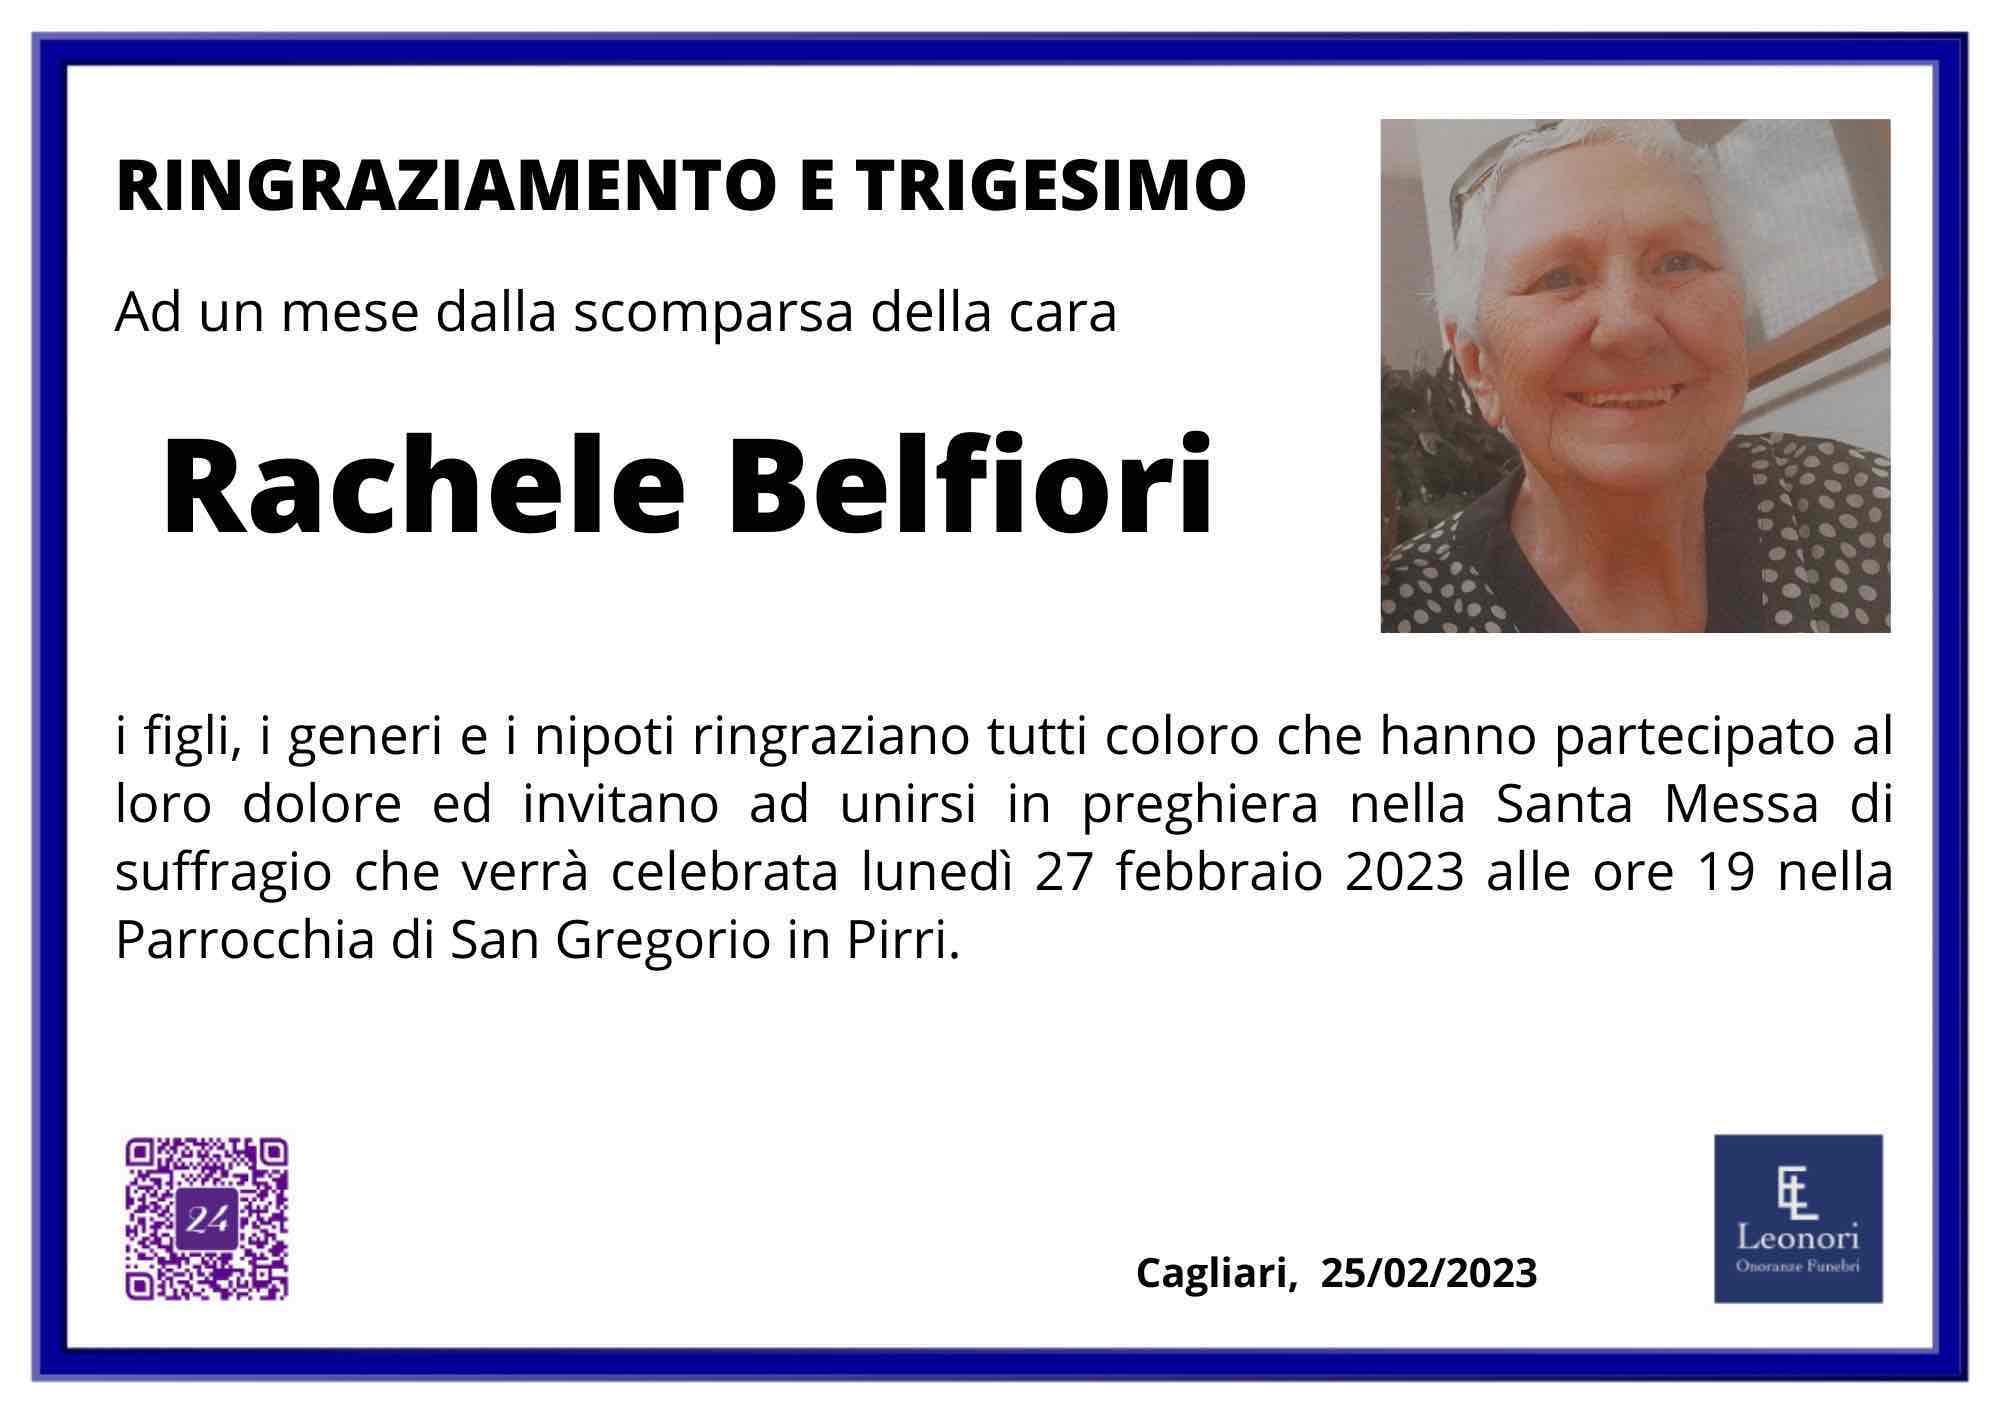 Rachele Belfiori